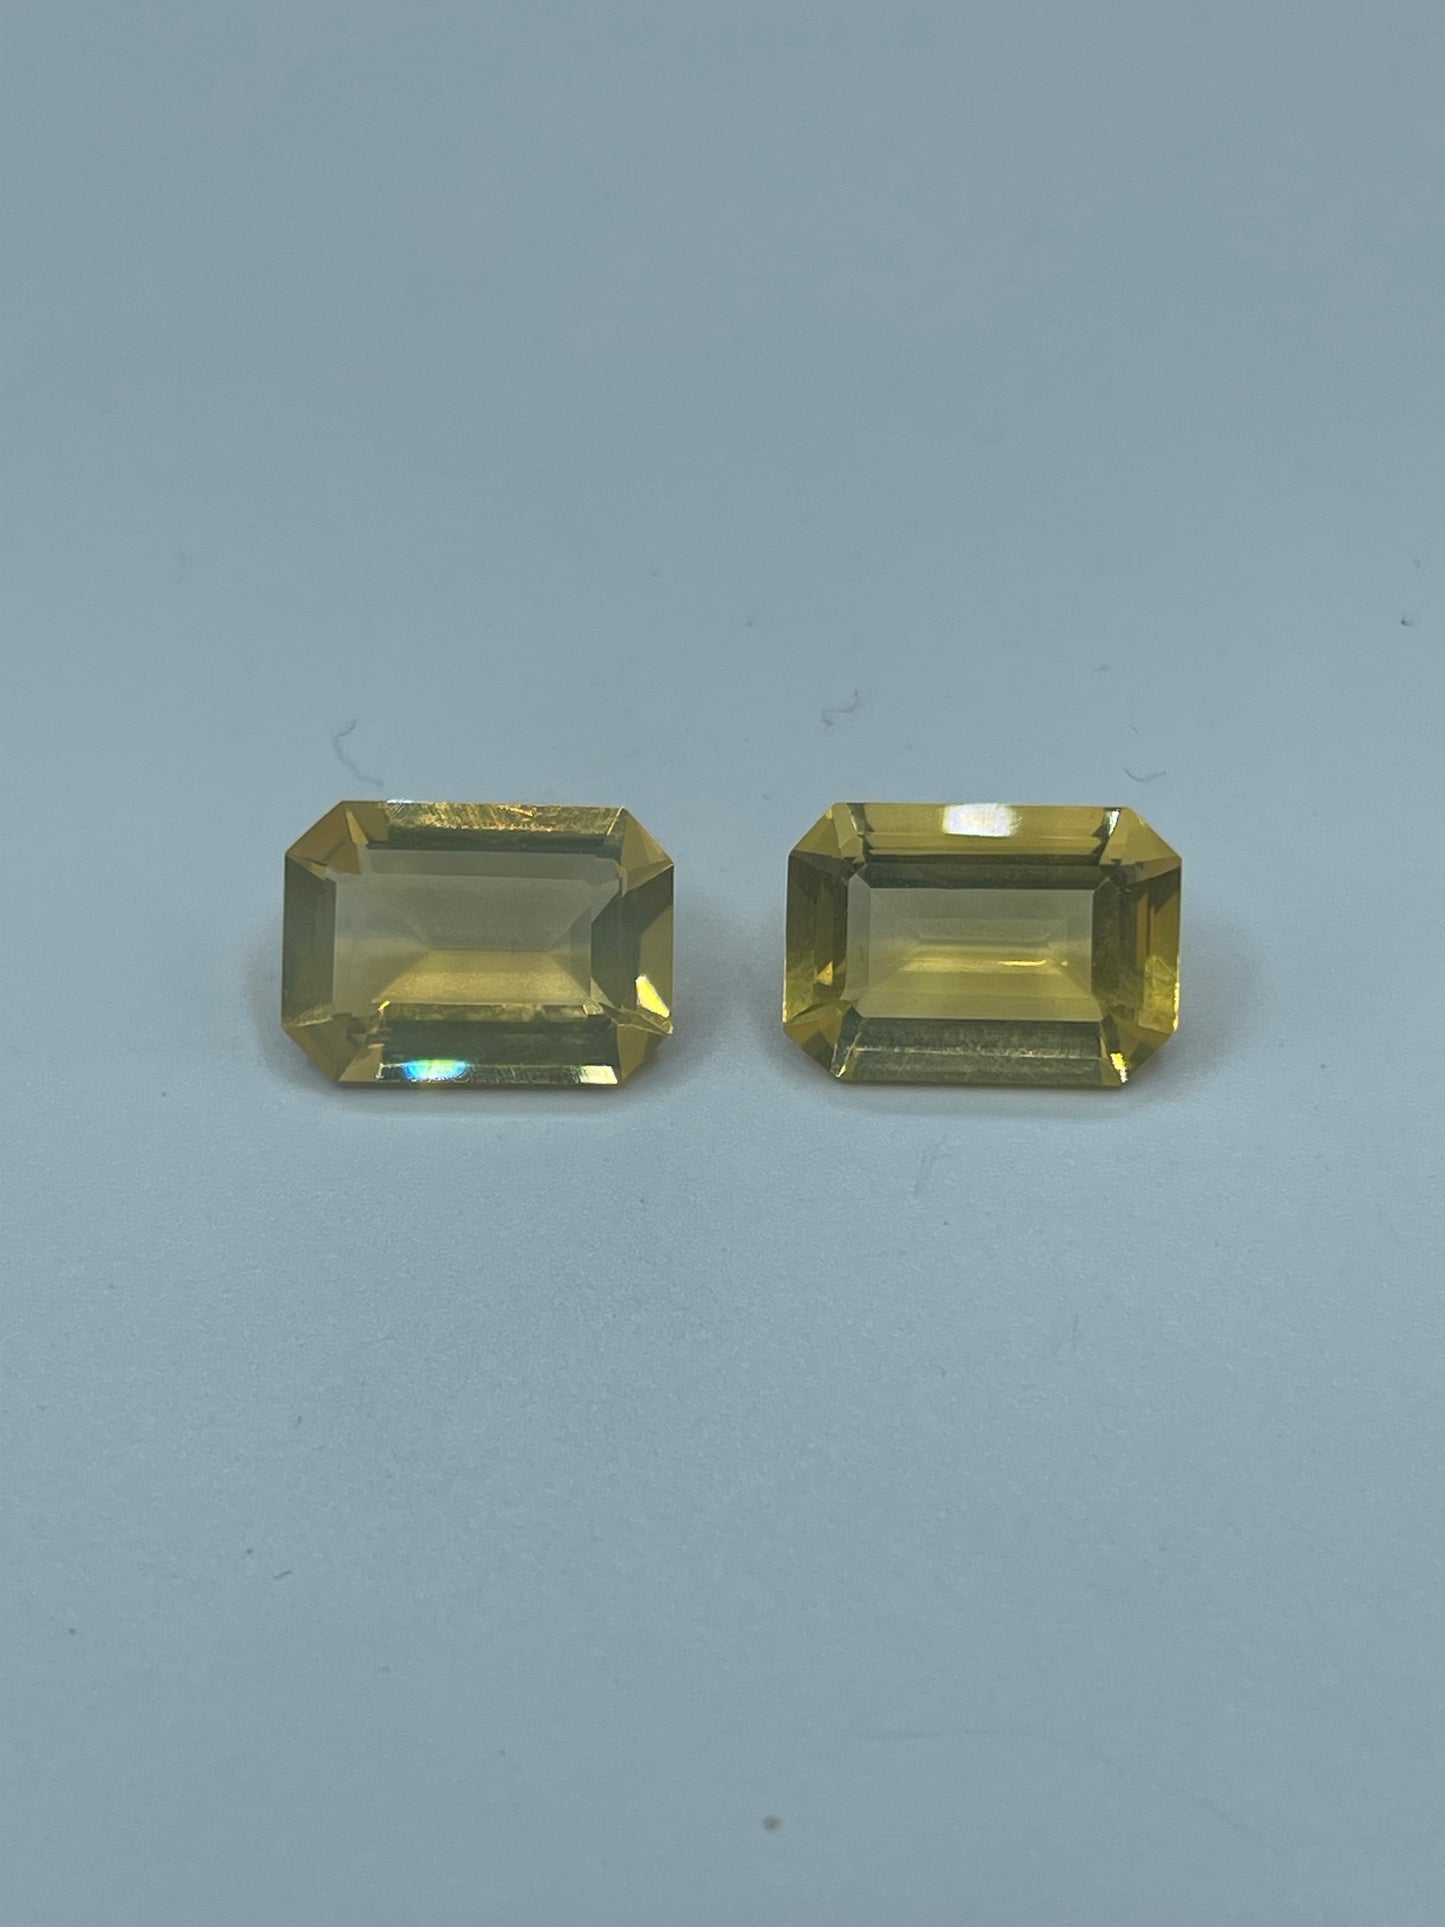 8.76 Carat Natural Mexican Opal Emerald Cut Matching Loose Gemstones (13.8 x 9.7 x 6.2 MM)